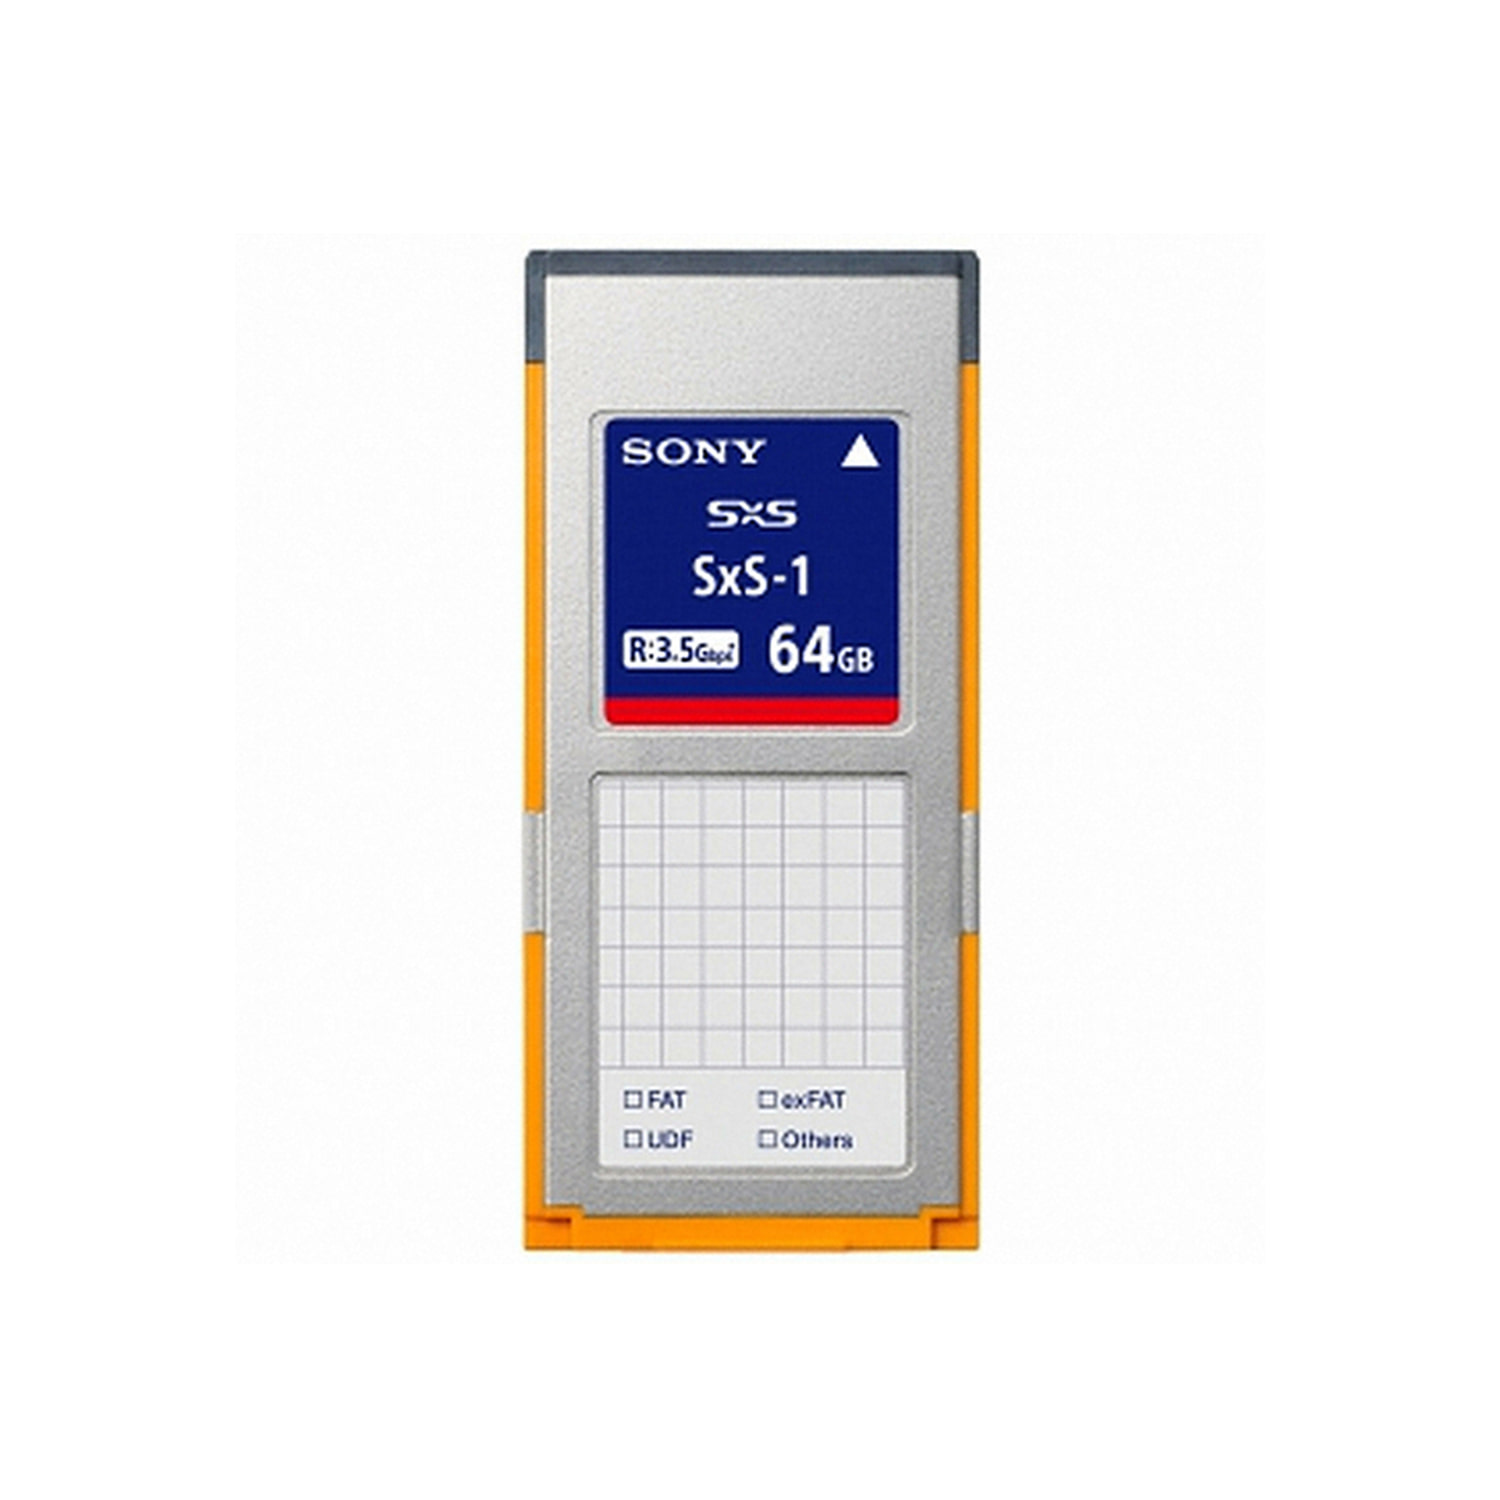 SXS-1 Series Memory Card (64GB)